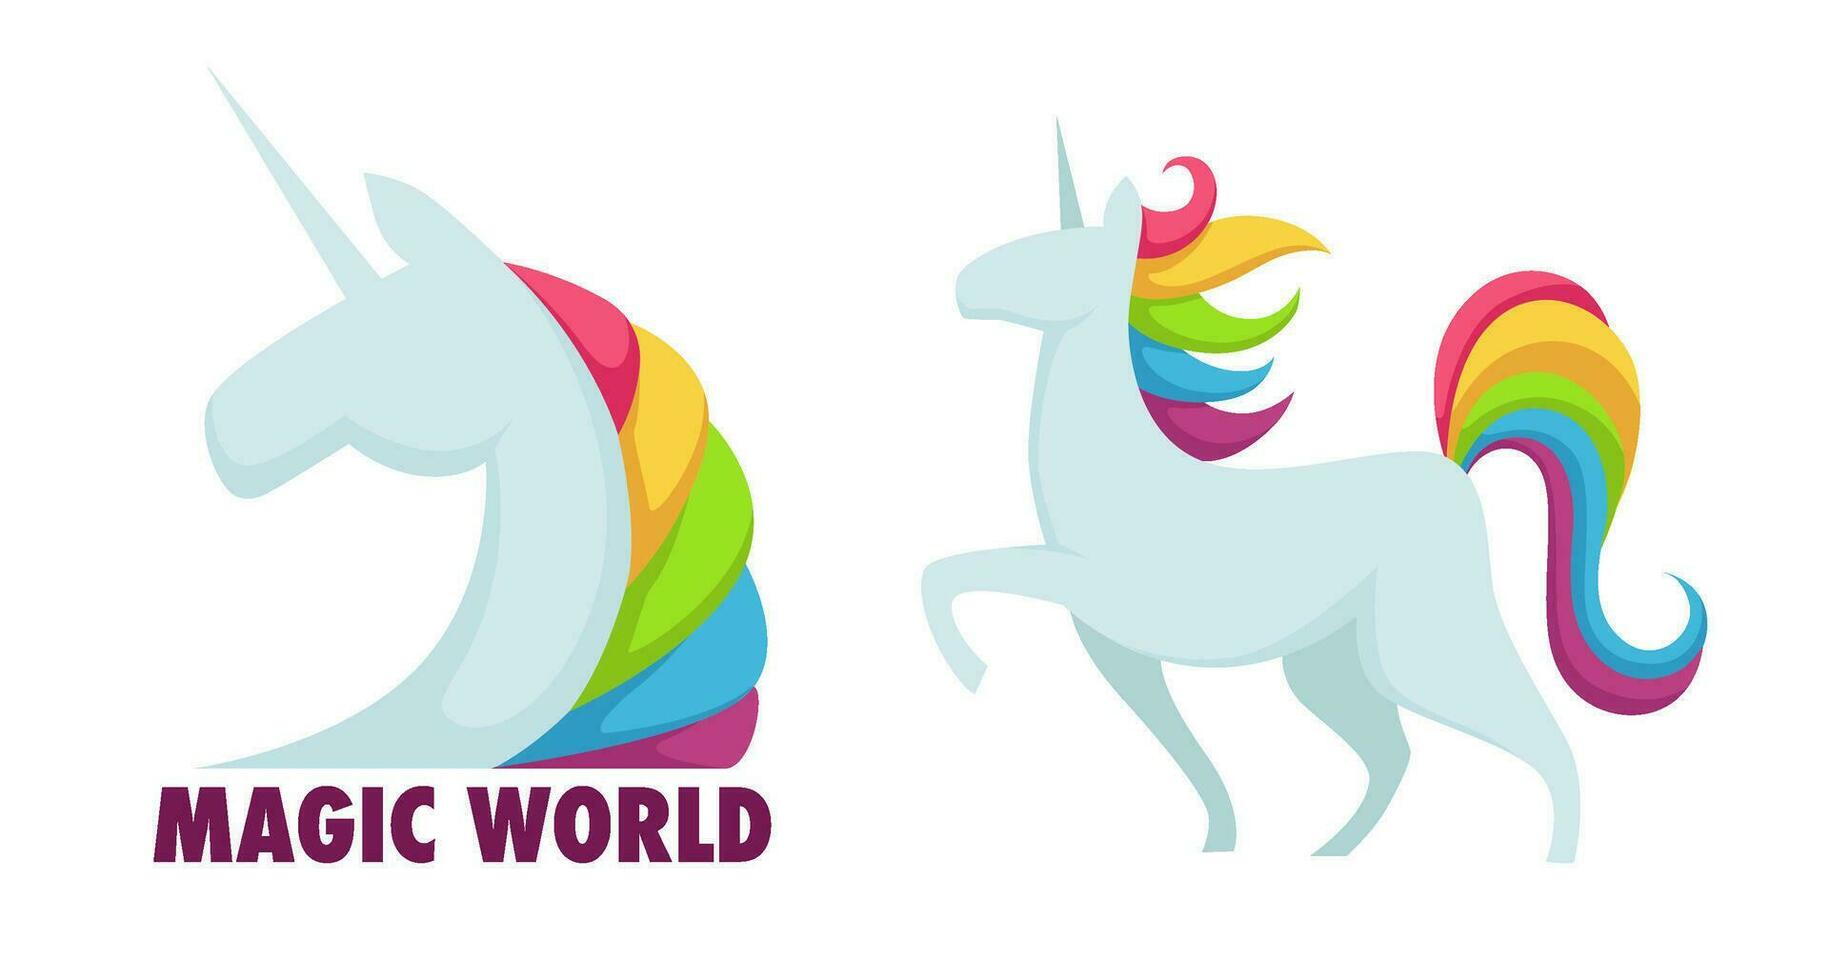 Magic world, unicorn character with rainbow hair vector